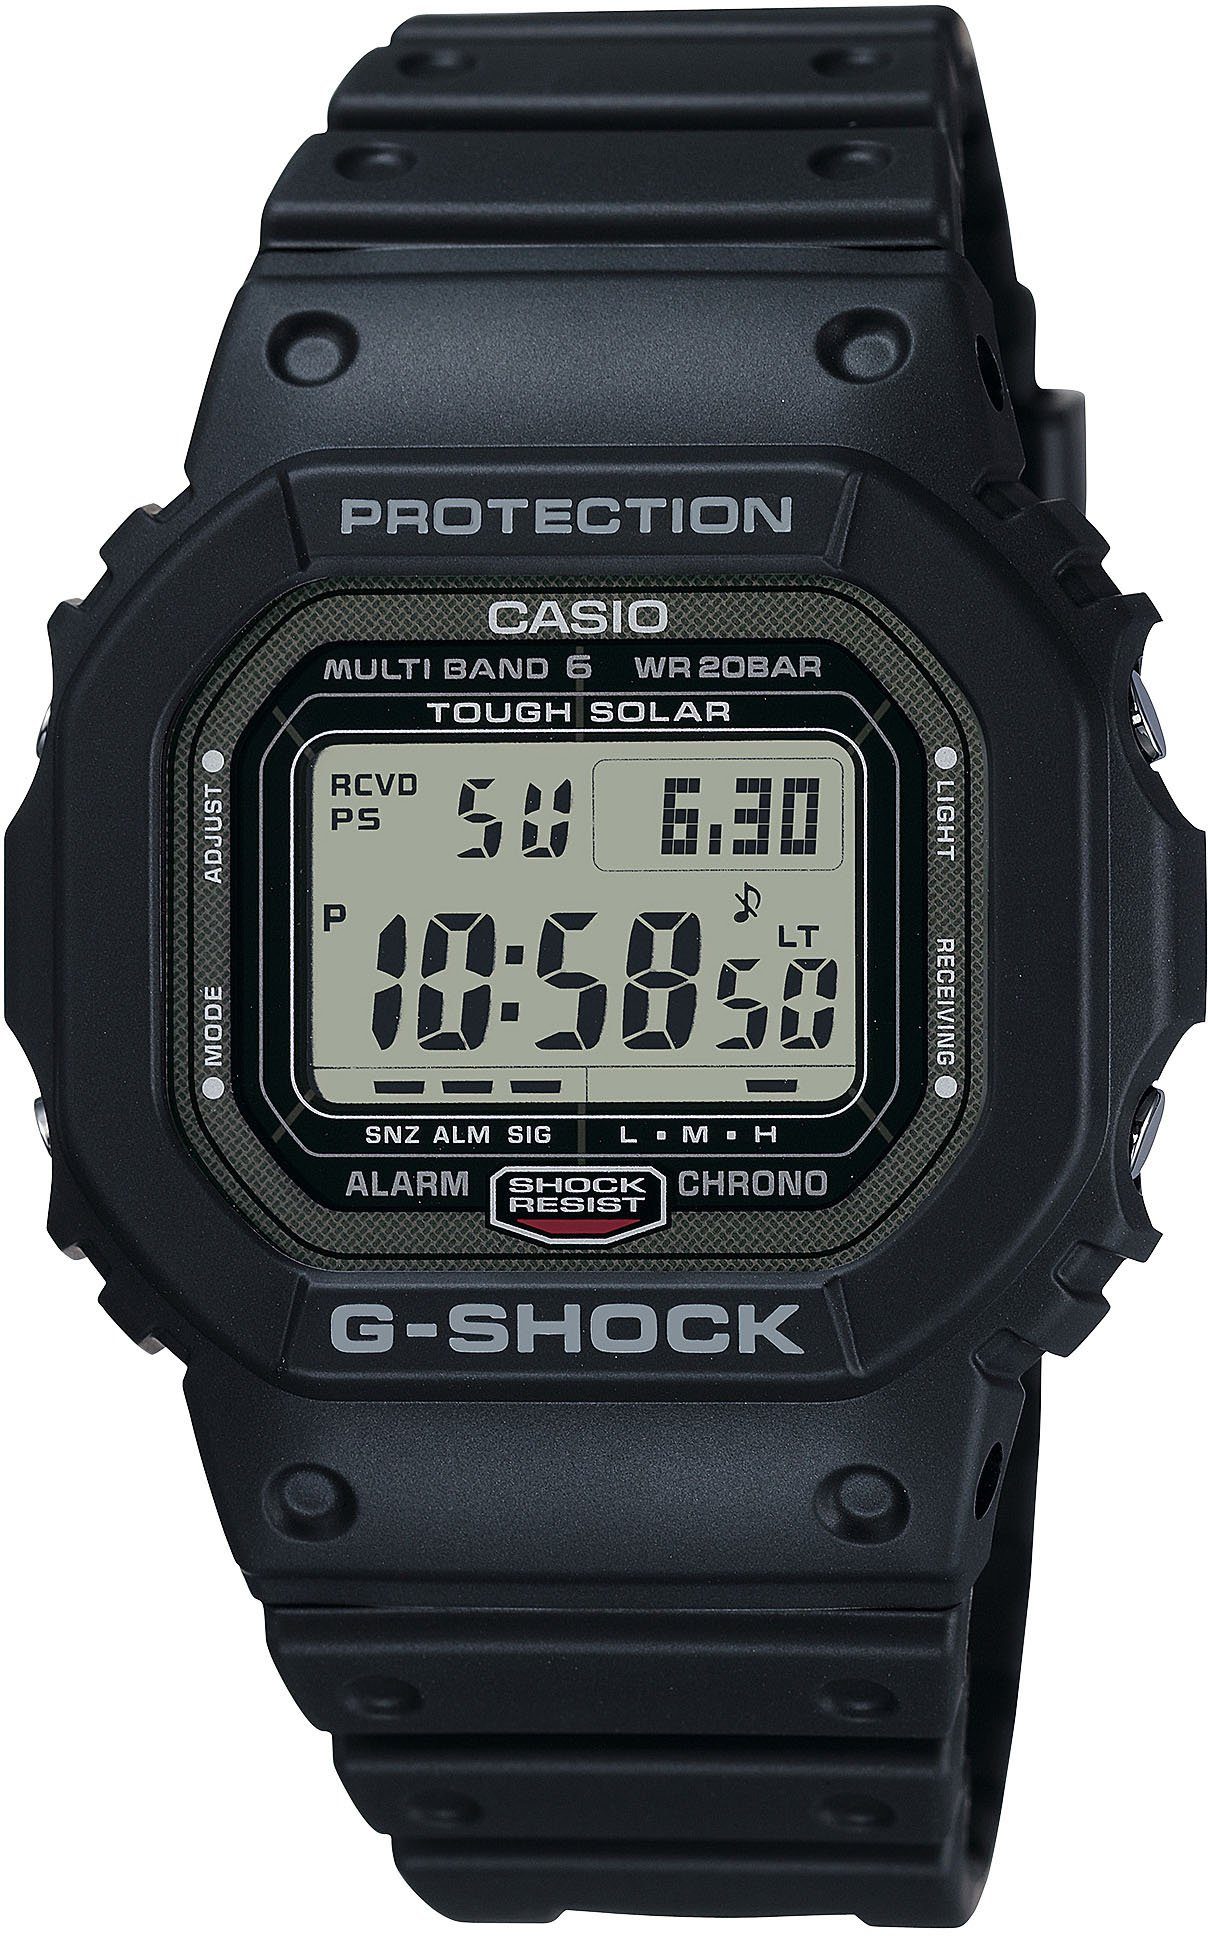 CASIO G-SHOCK Funkchronograph GW-5000U-1ER, Solaruhr, Armbanduhr, Herrenuhr, digital, retro,bis 20 bar wasserdicht